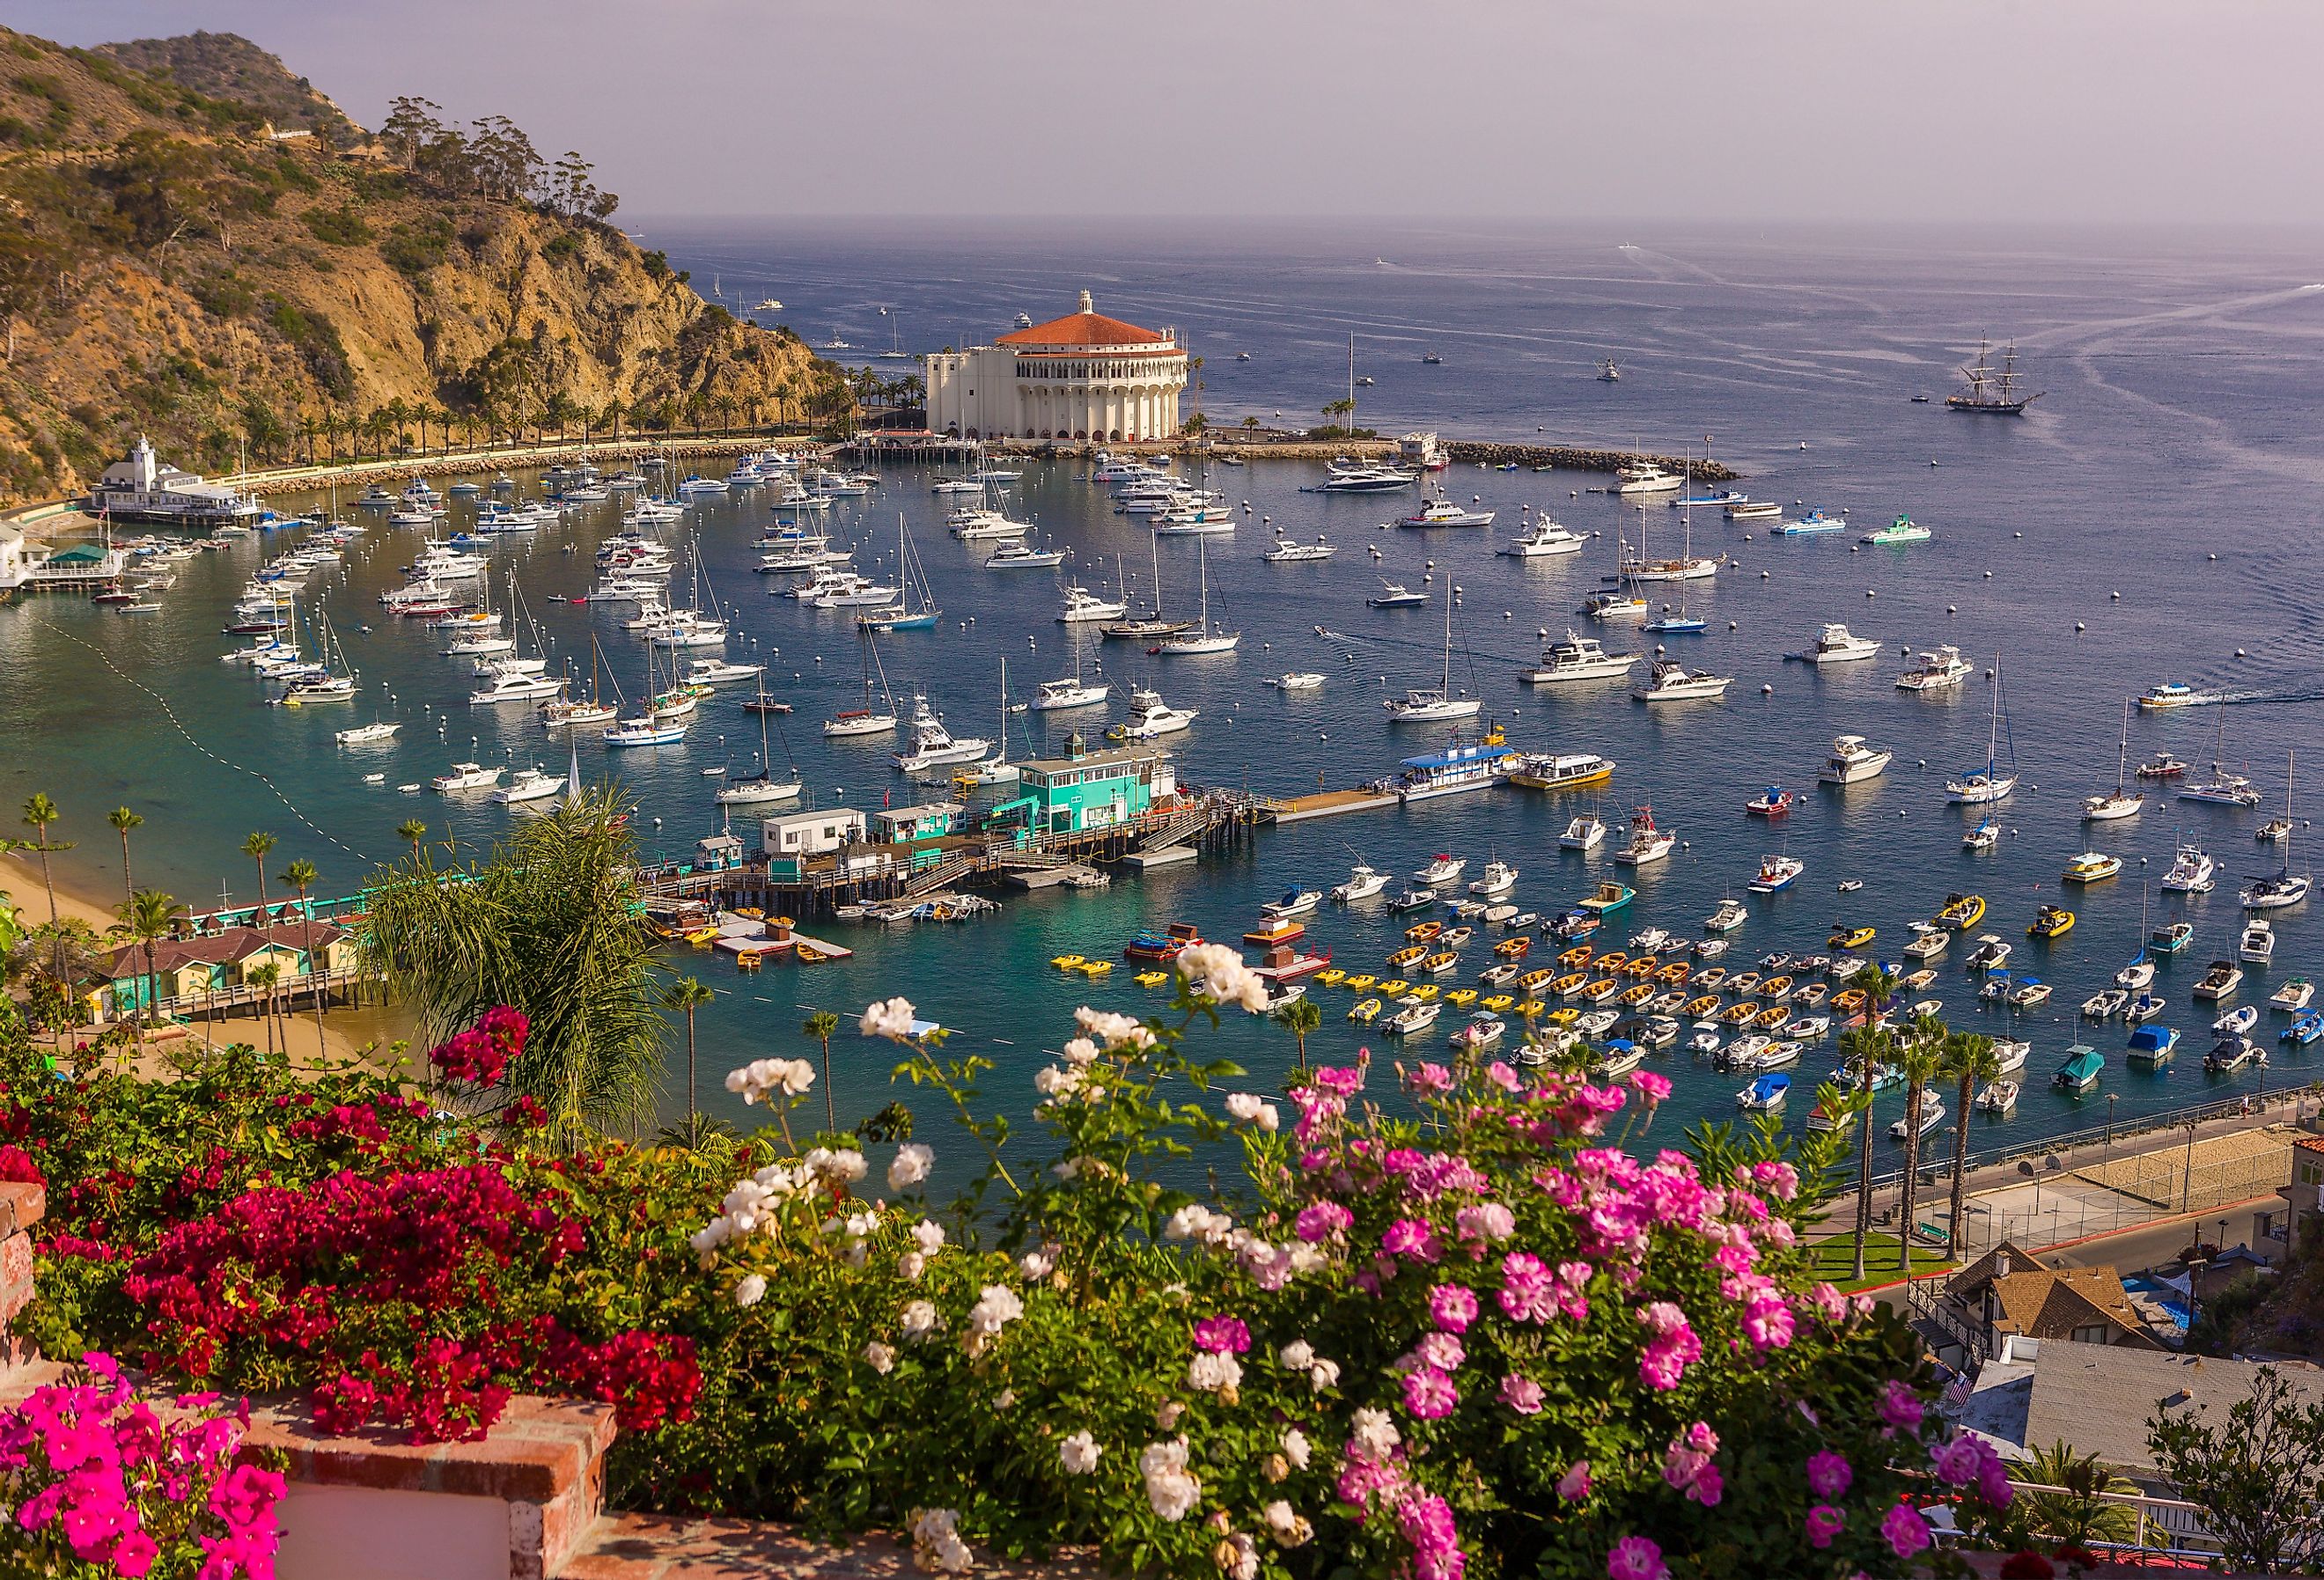 Santa Catalina Island, Avalon, California. Image credit Rob Crandall via Shutterstock